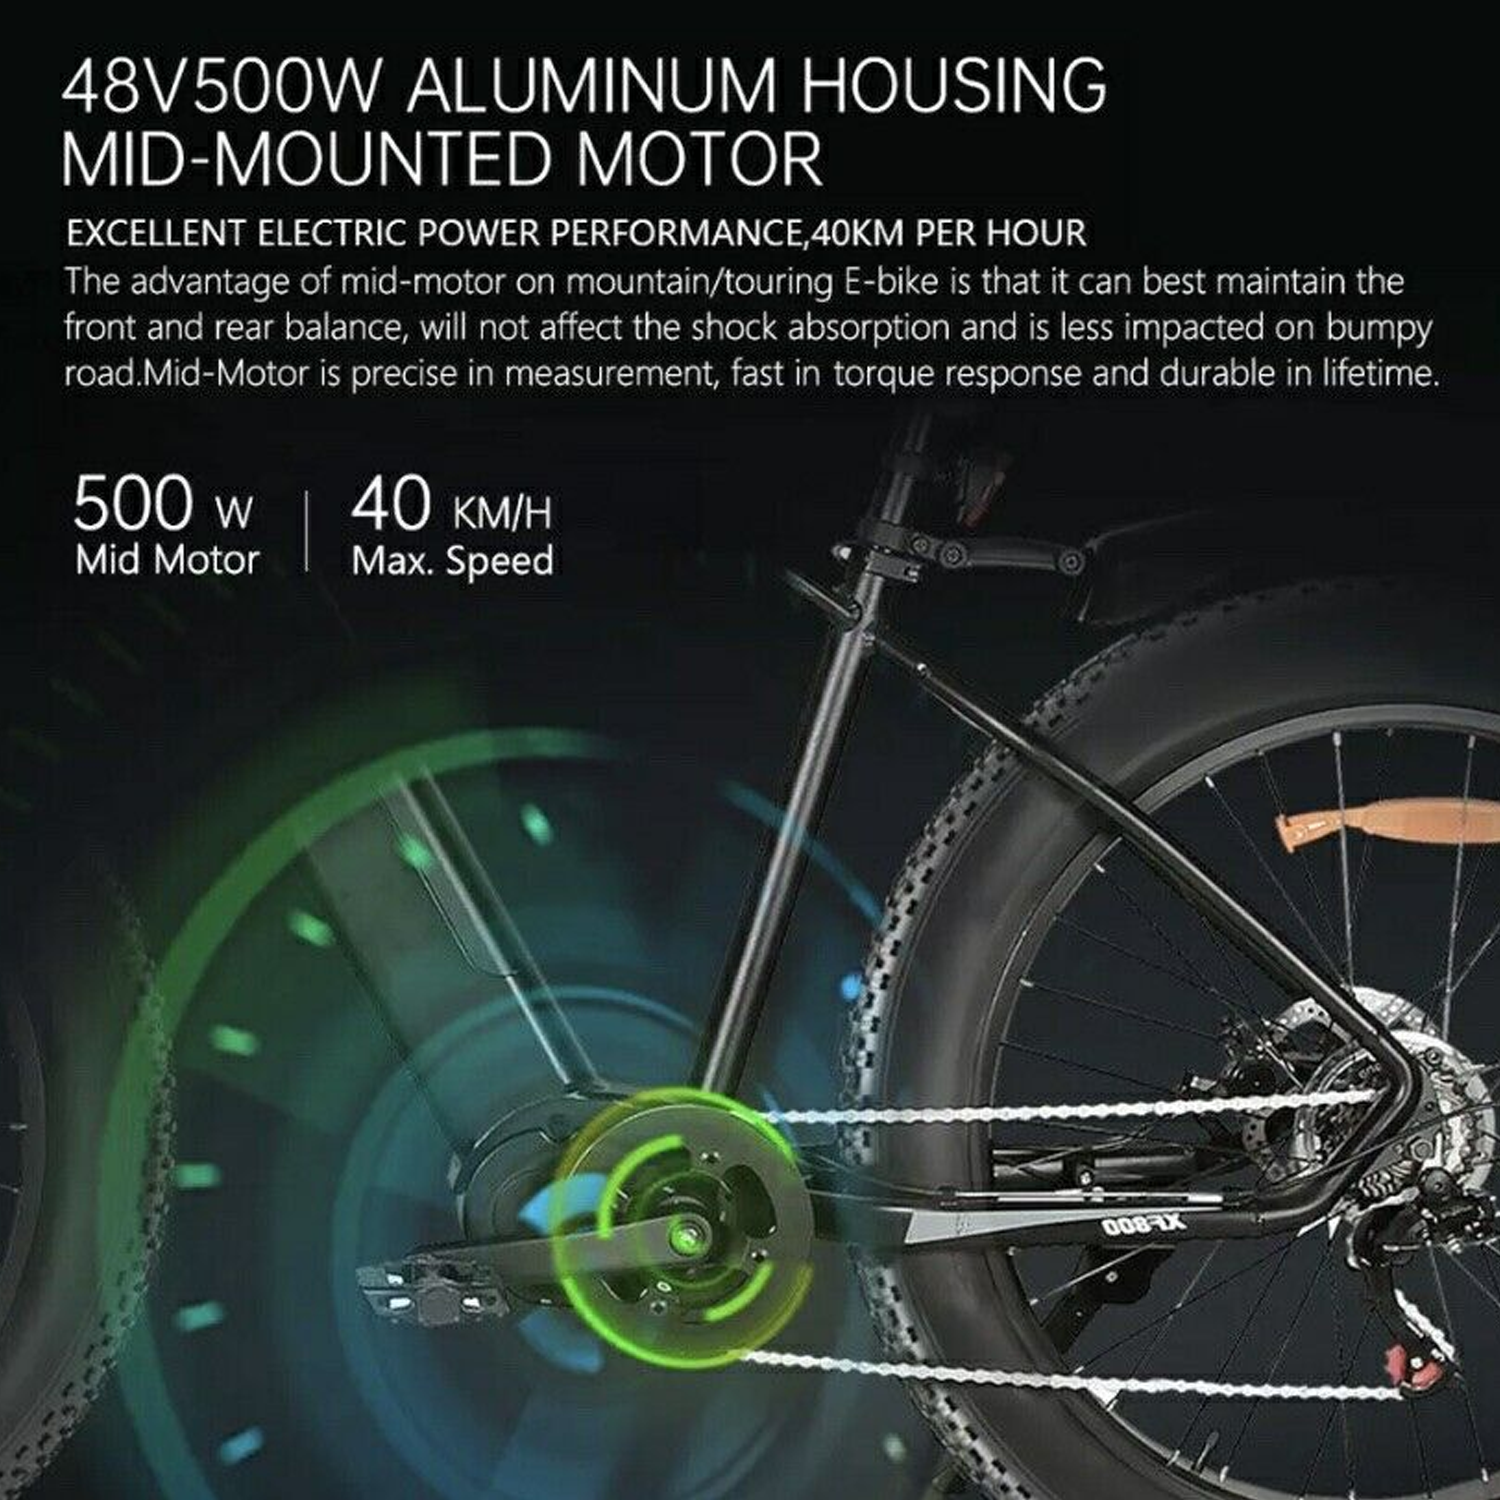 (Laufradgröße: Zoll, Urbanbike BEZIOR Unisex-Rad, XF800 Grun) 26